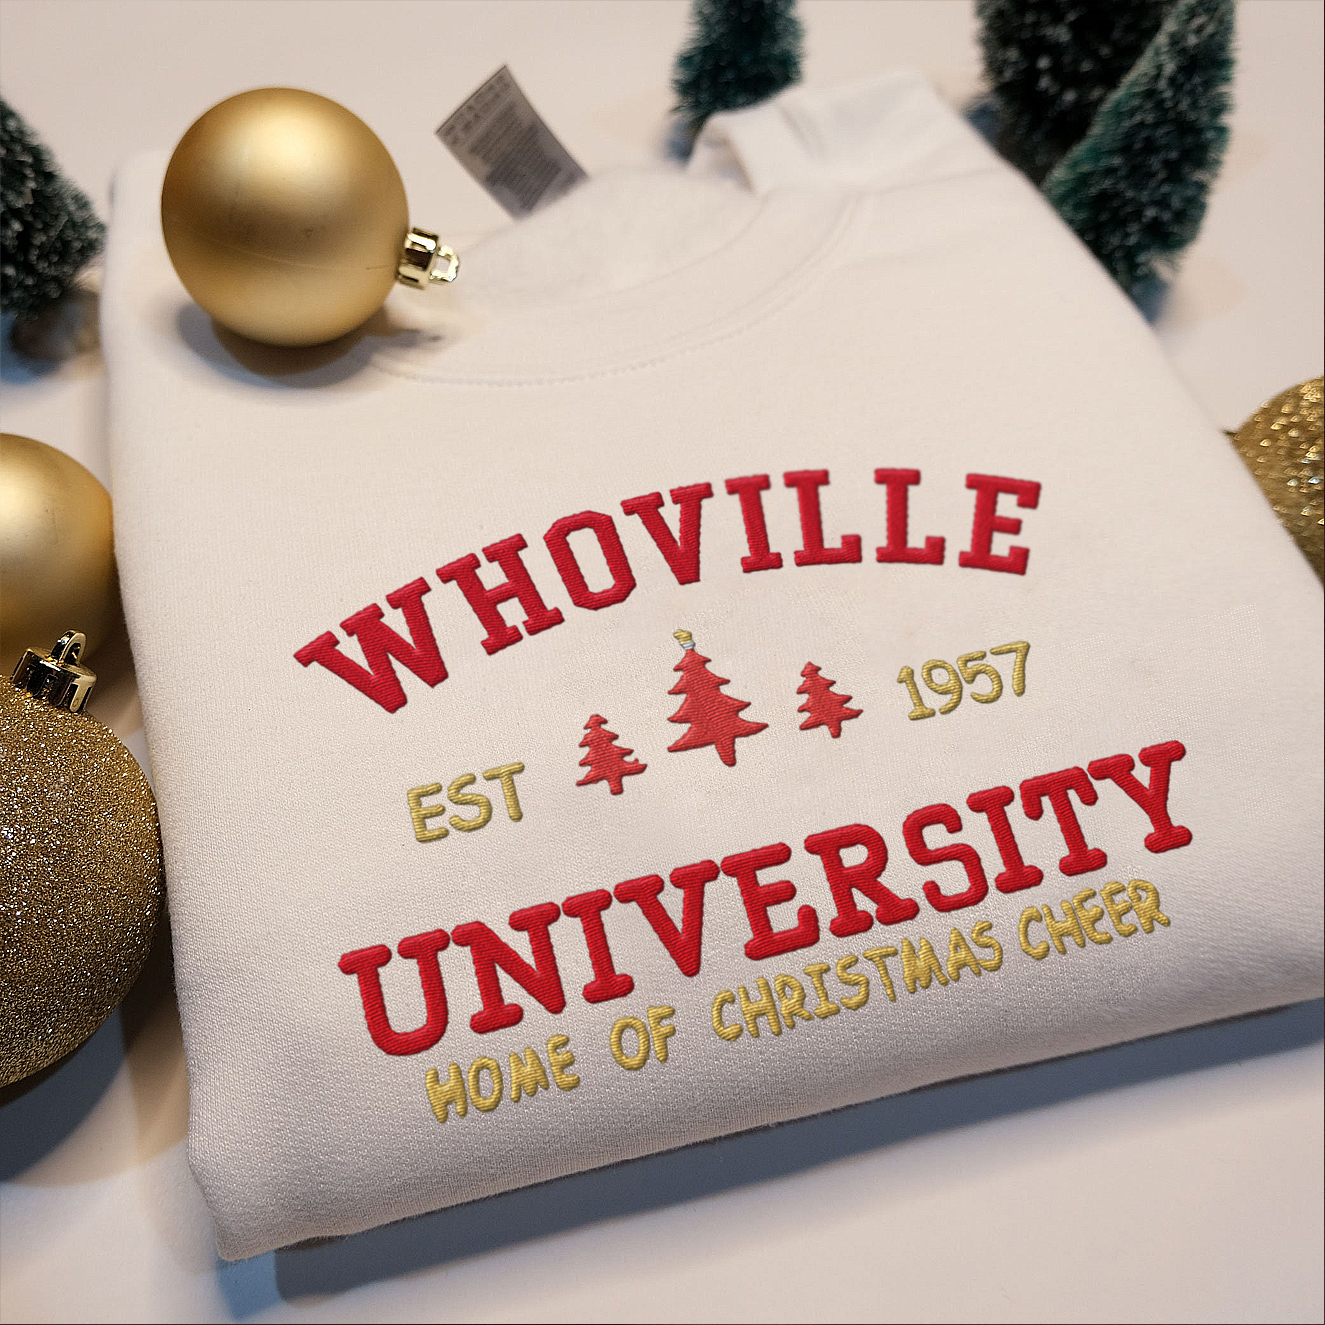 SobaShop Personalized Embroidered Whoville University Sweatshirt